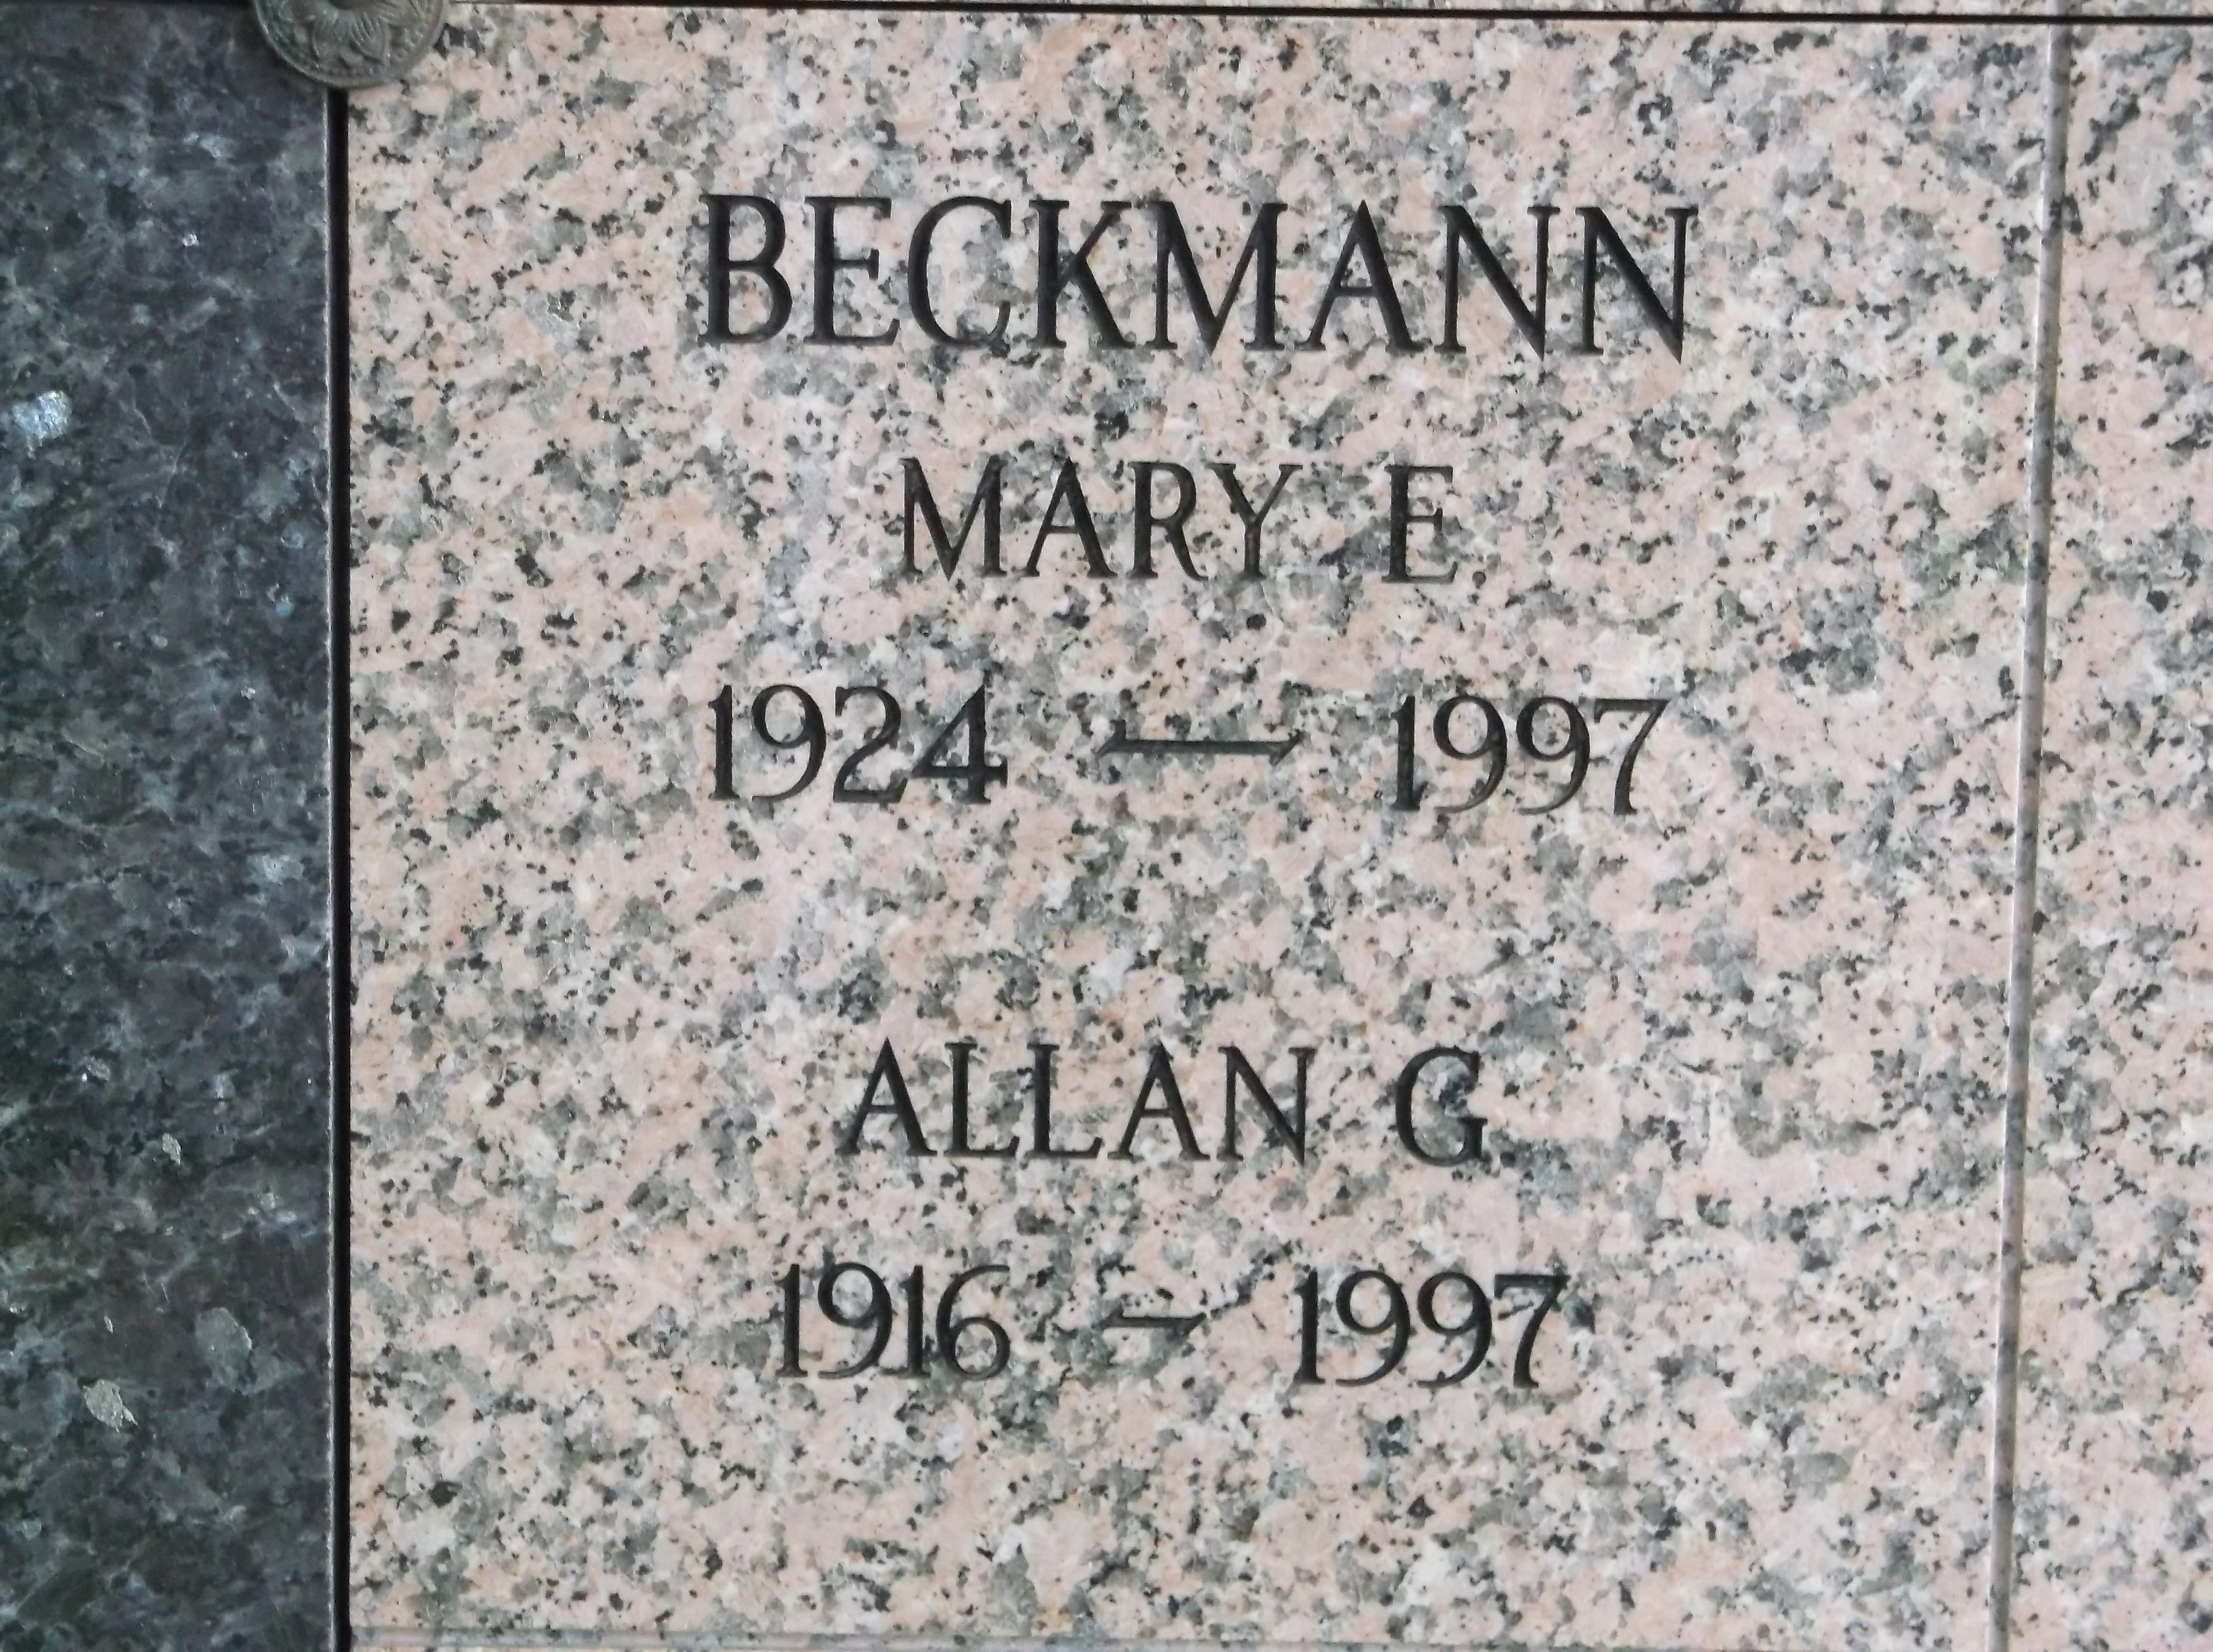 Mary E Beckmann